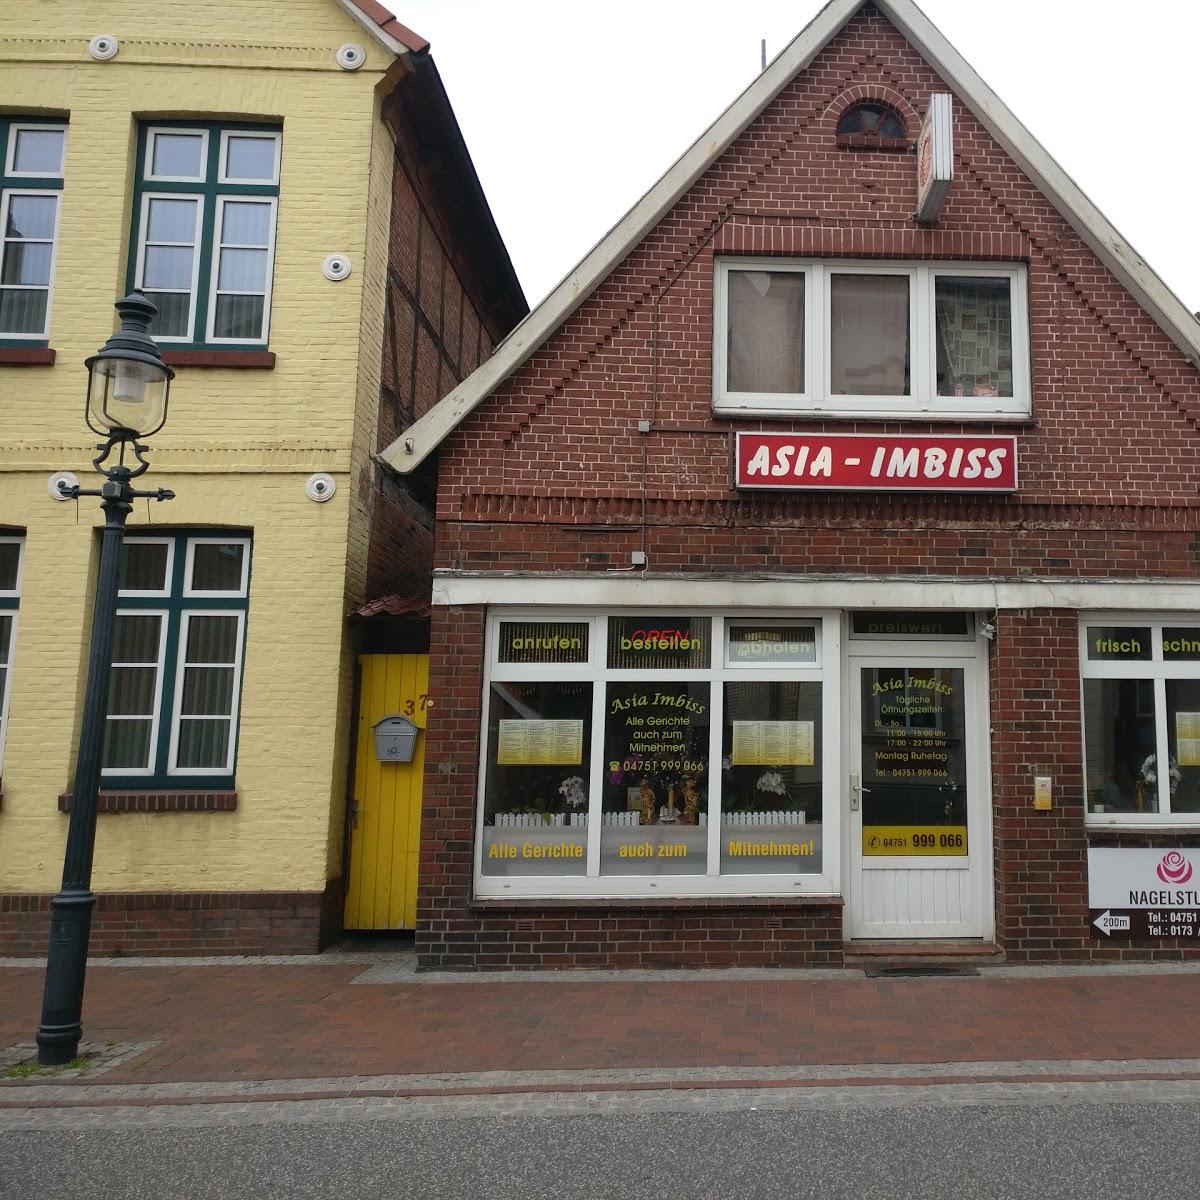 Restaurant "Asia Imbiss" in  Otterndorf